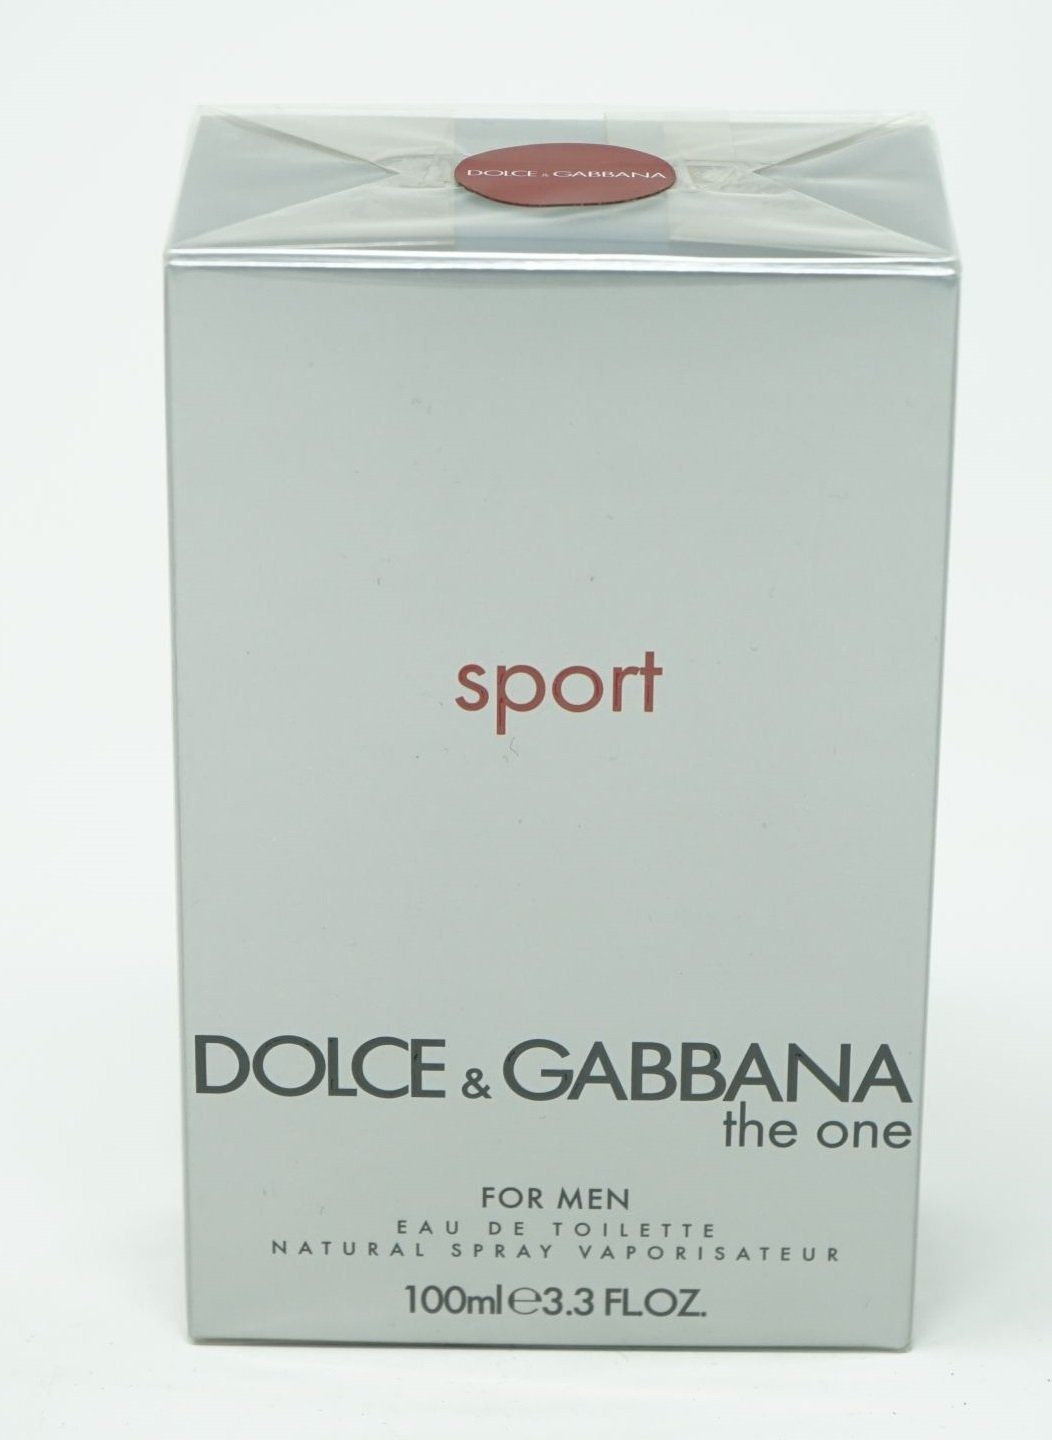 DOLCE & GABBANA de ml Gabbana Spray 100 Eau One For & Toilette Eau Men Toilette The Dolce Sport de